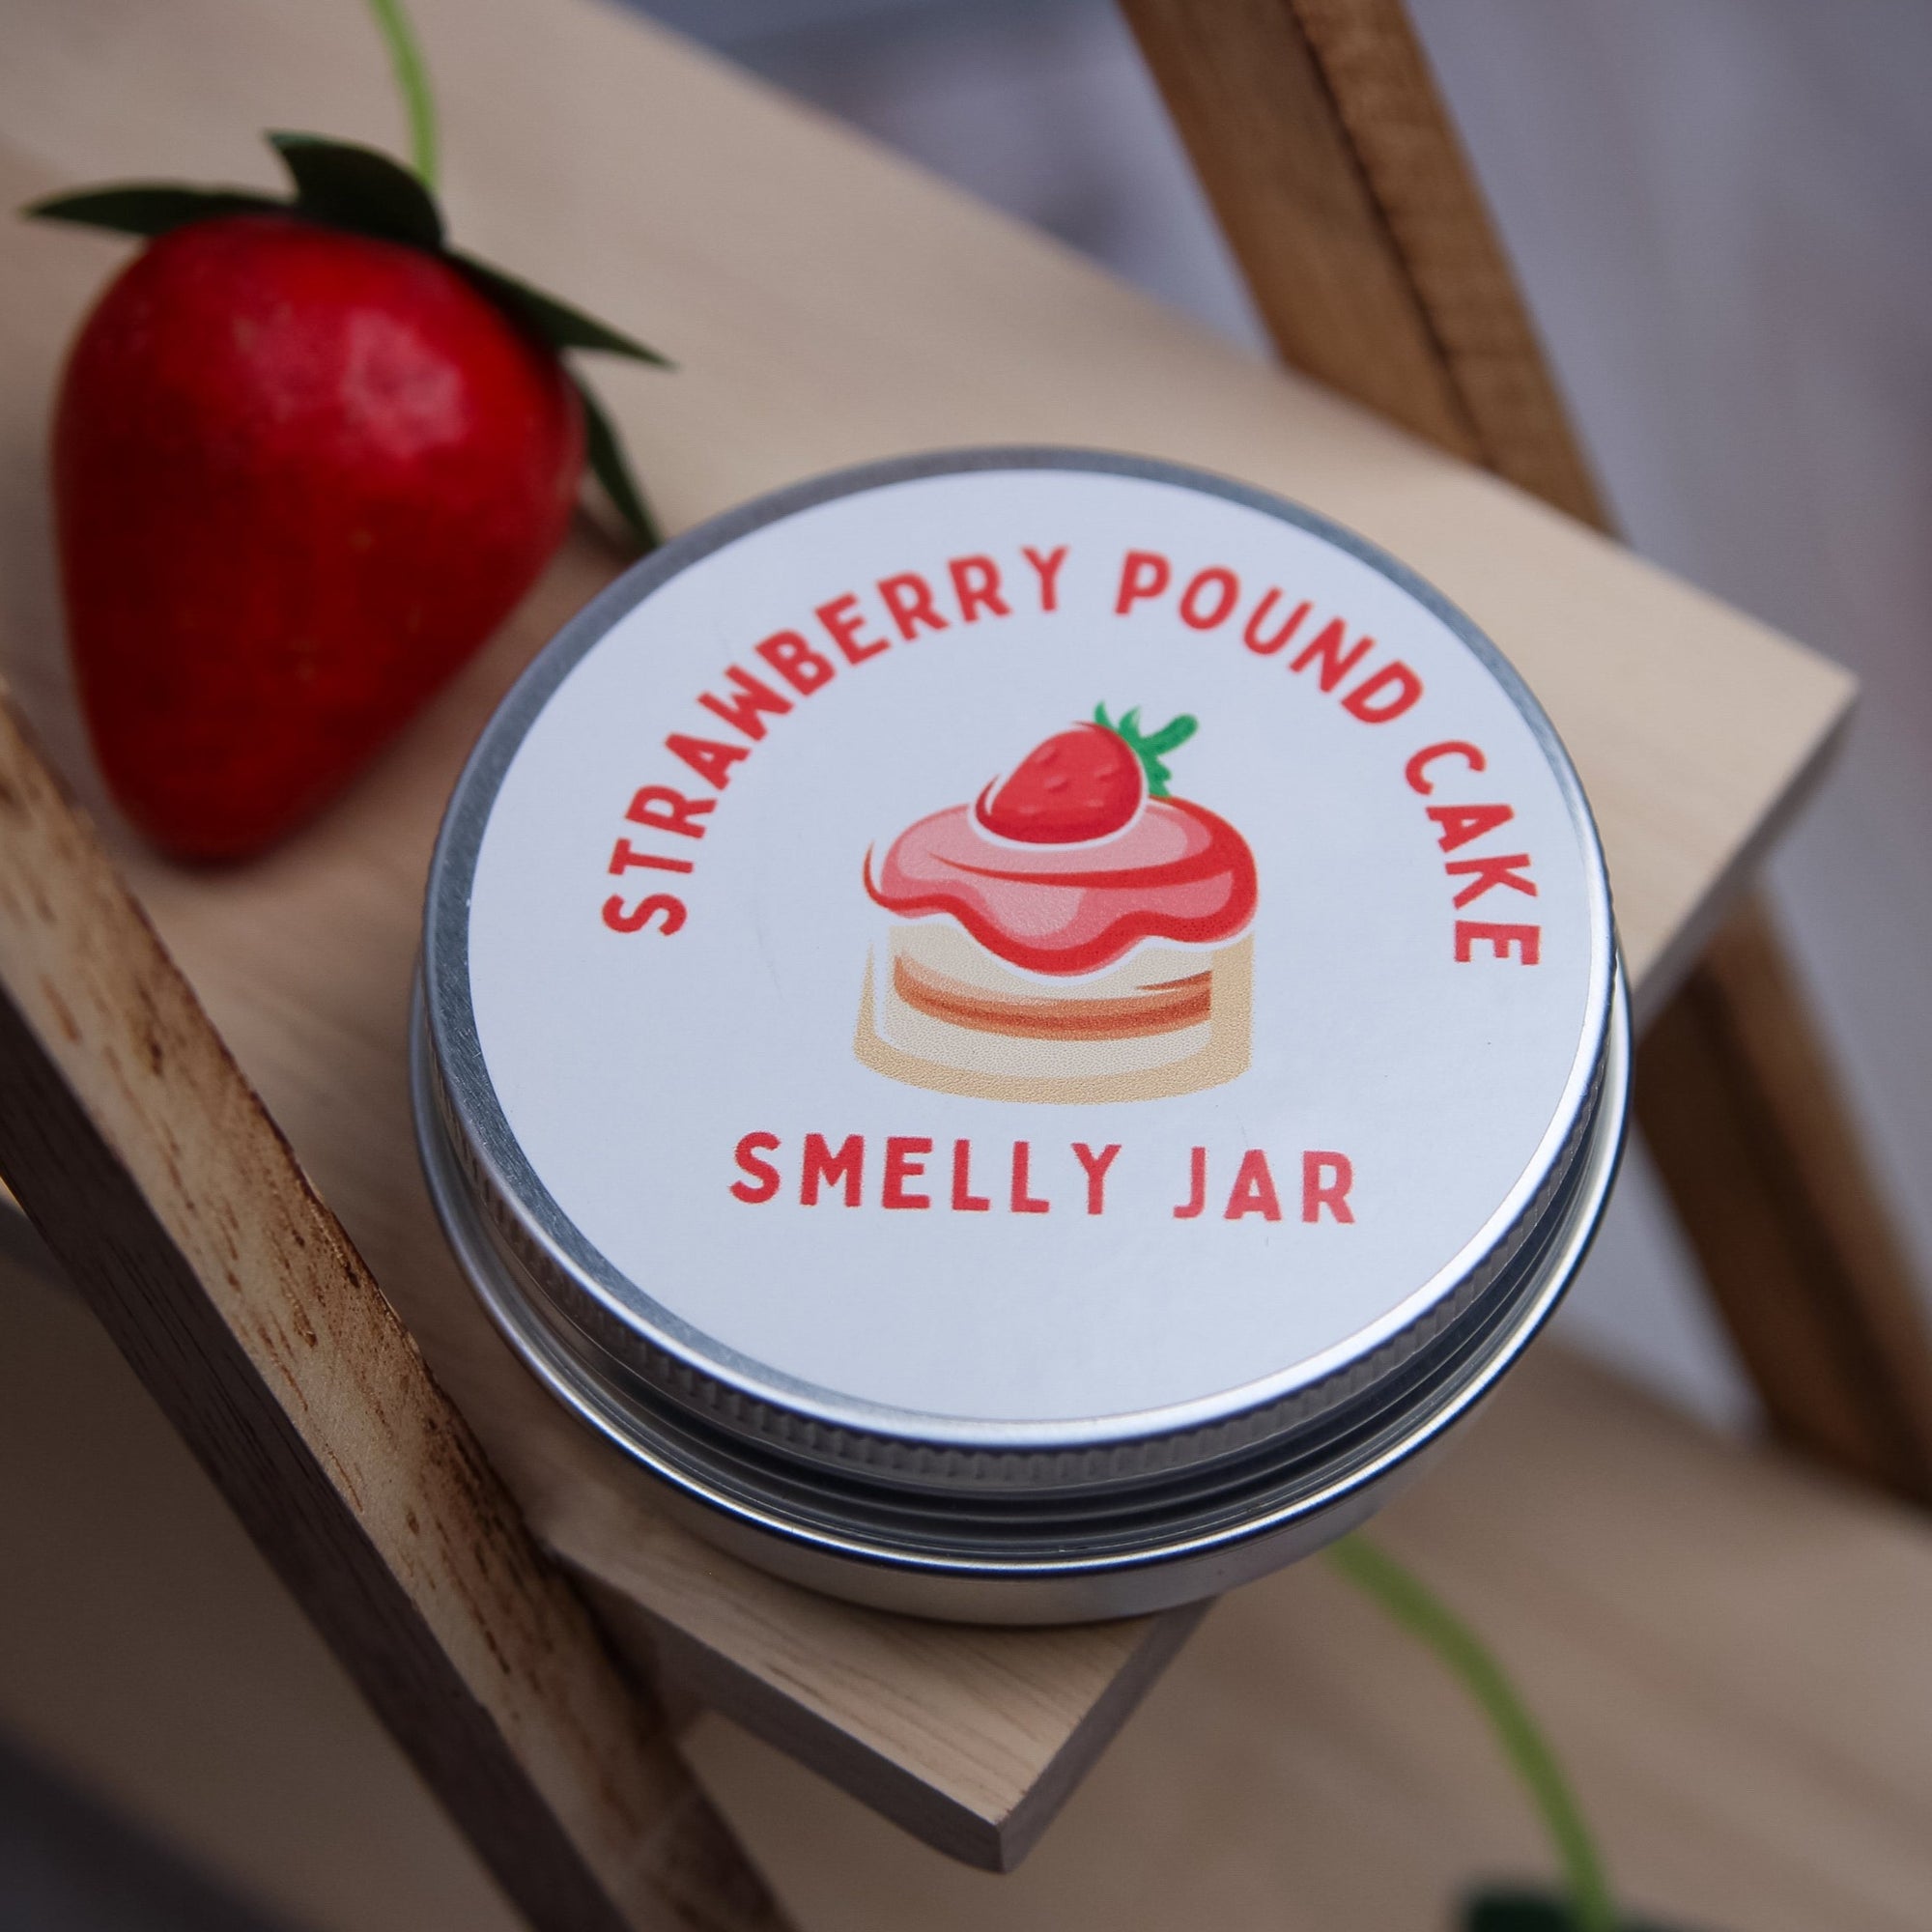 Strawberry Poundcake Smelly Car Jar